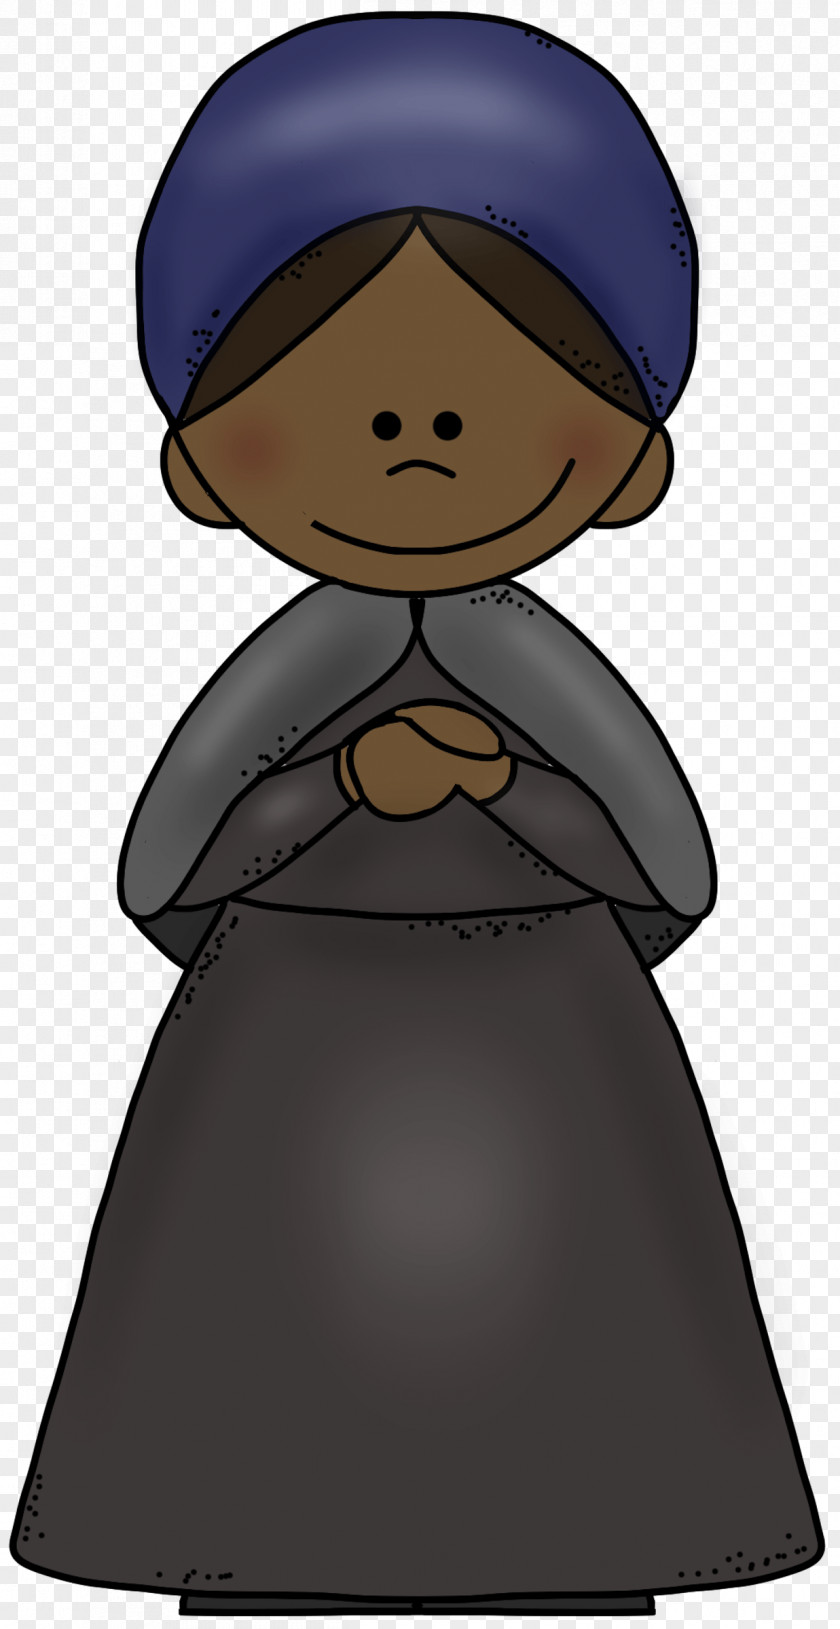 Harriet Tubman 20 Dollar Bill Cartoon American Civil War Clip Art Drawing Underground Railroad African Americans PNG